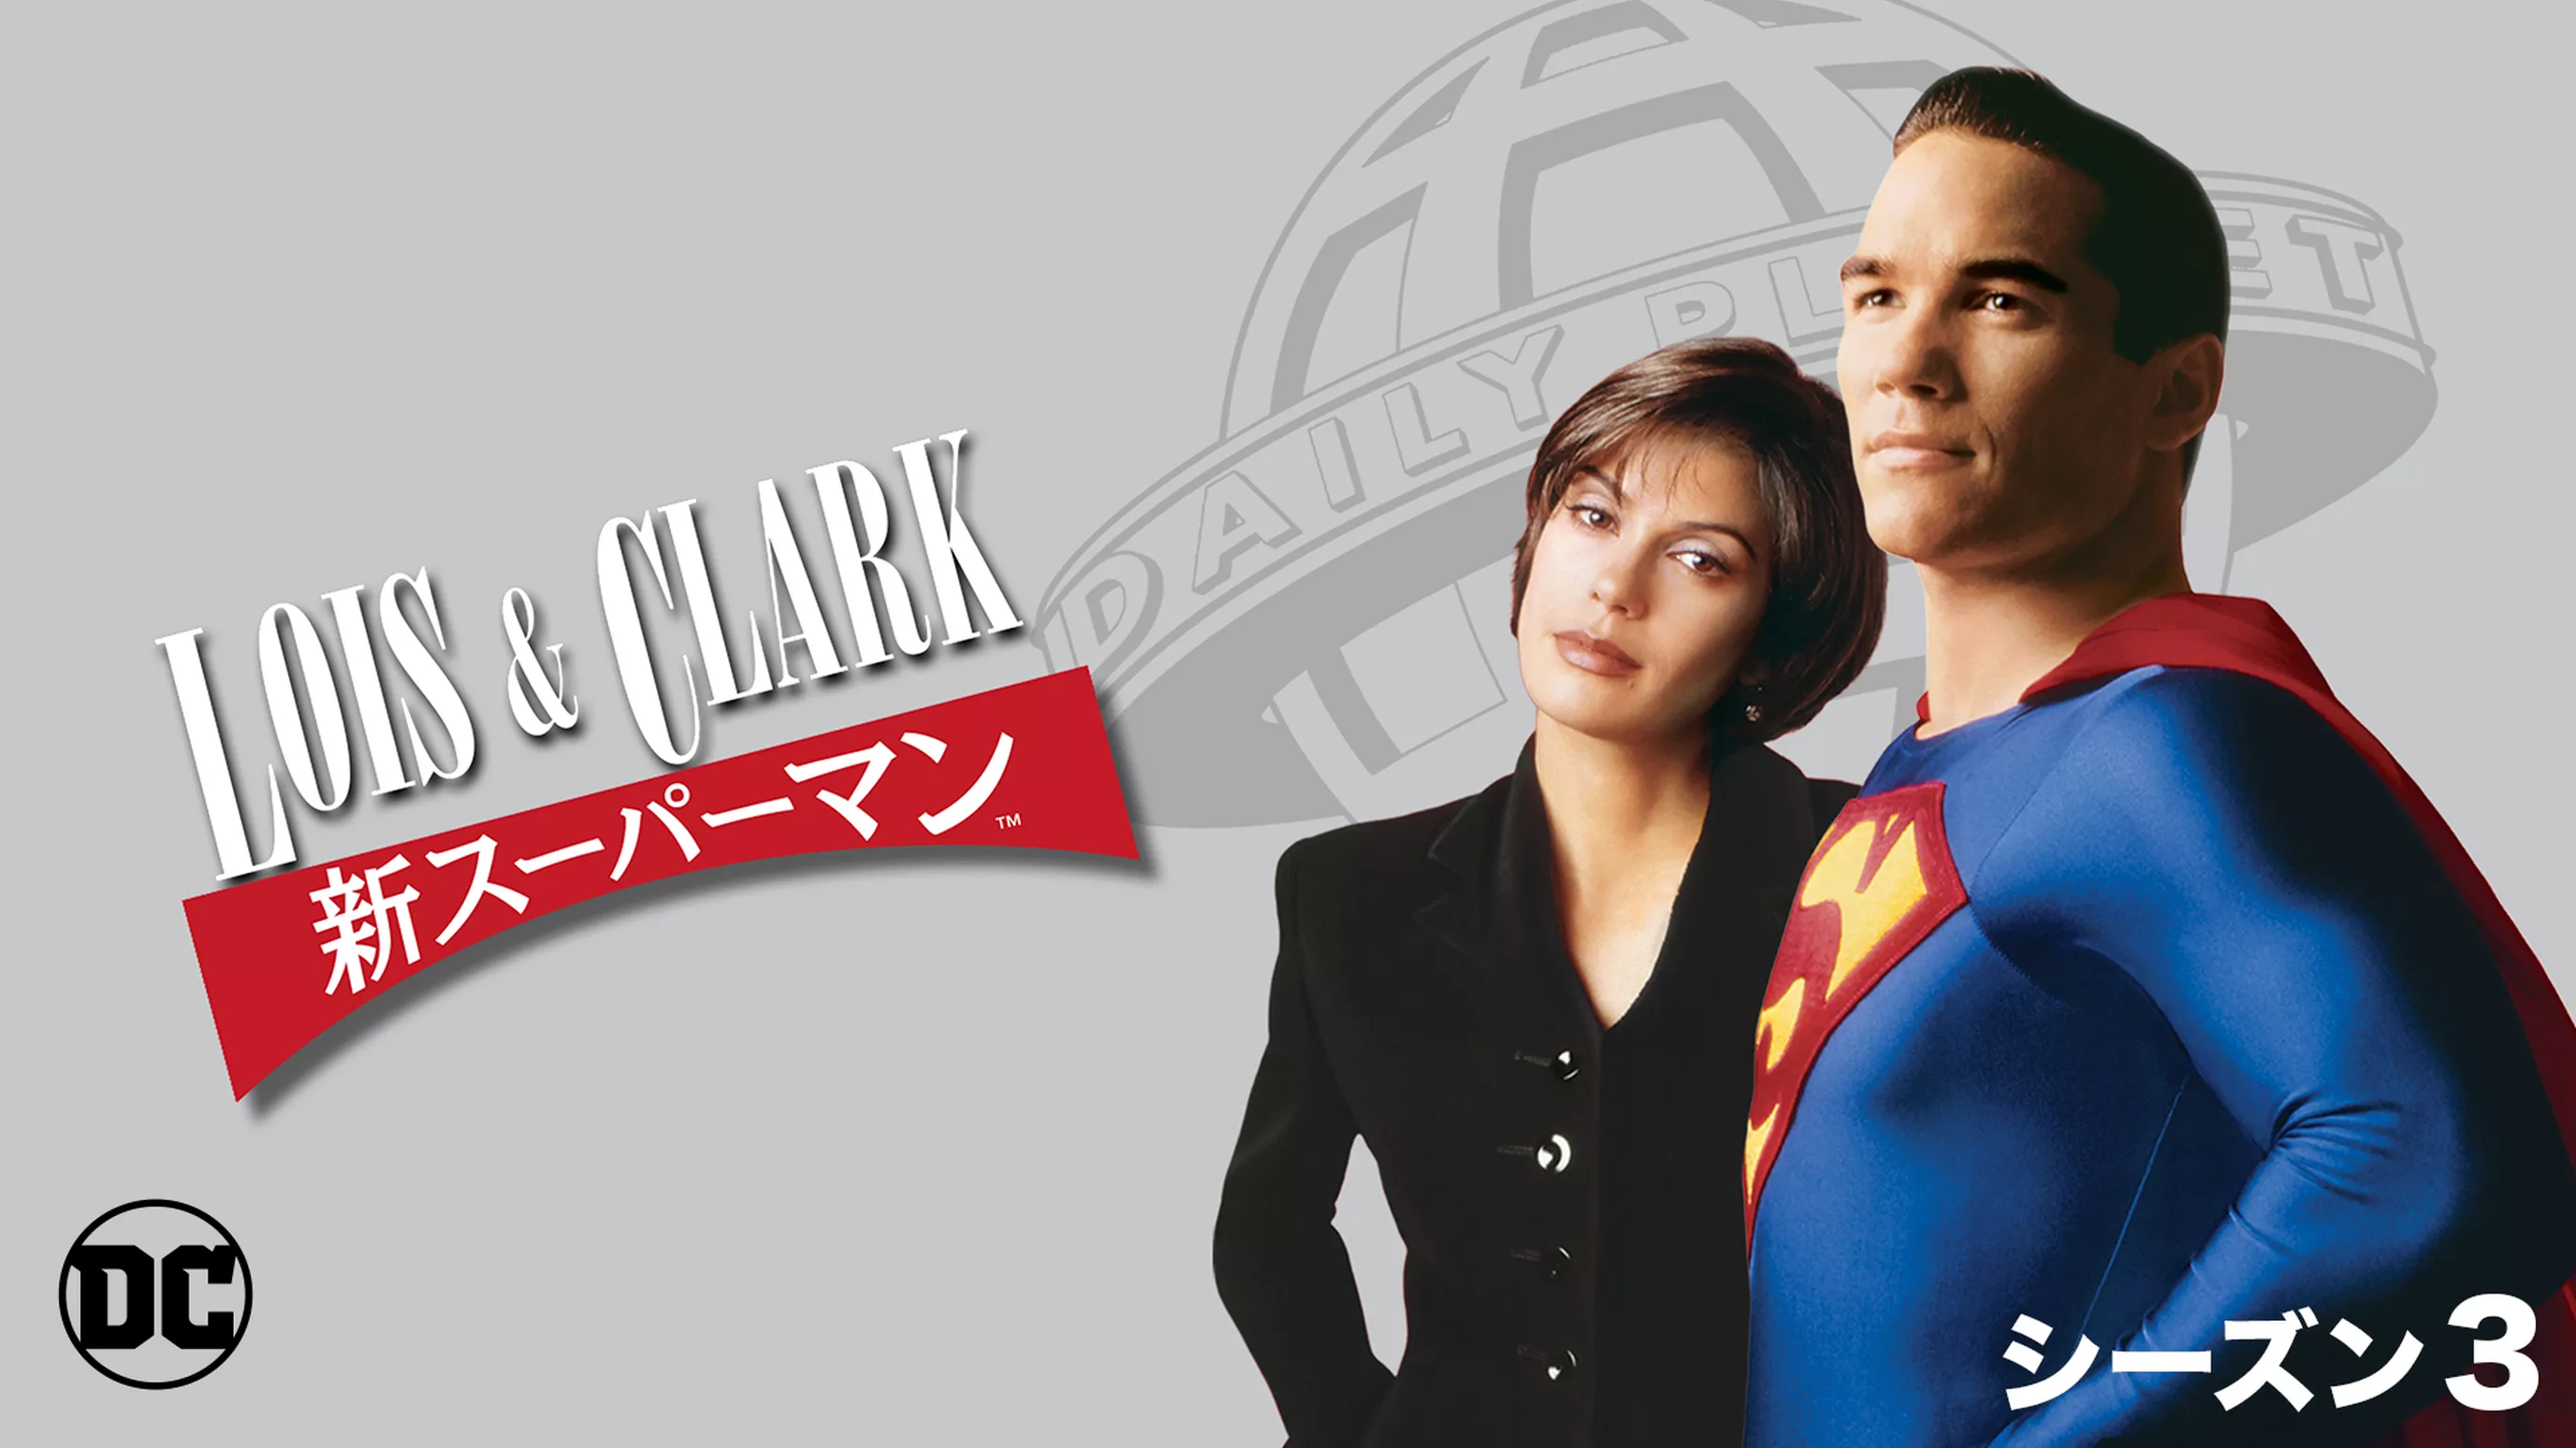 LOIS & CLARK/新スーパーマン シーズン3